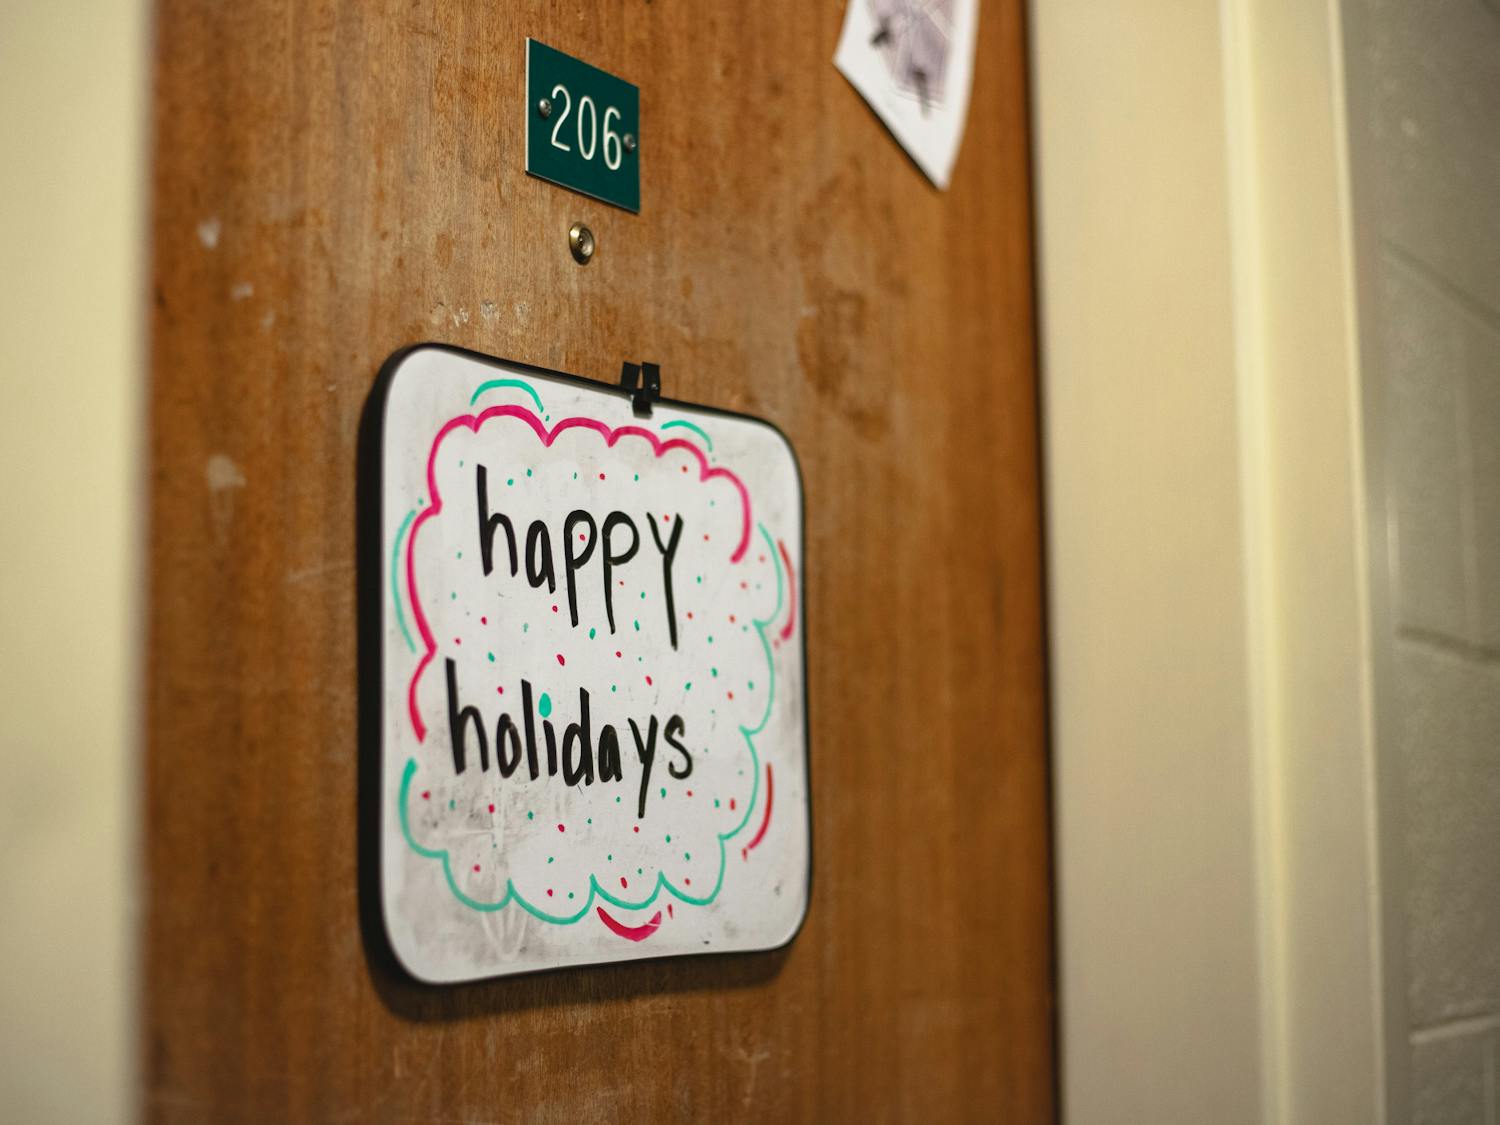 Being festive in the dorms _ Maltry .jpg